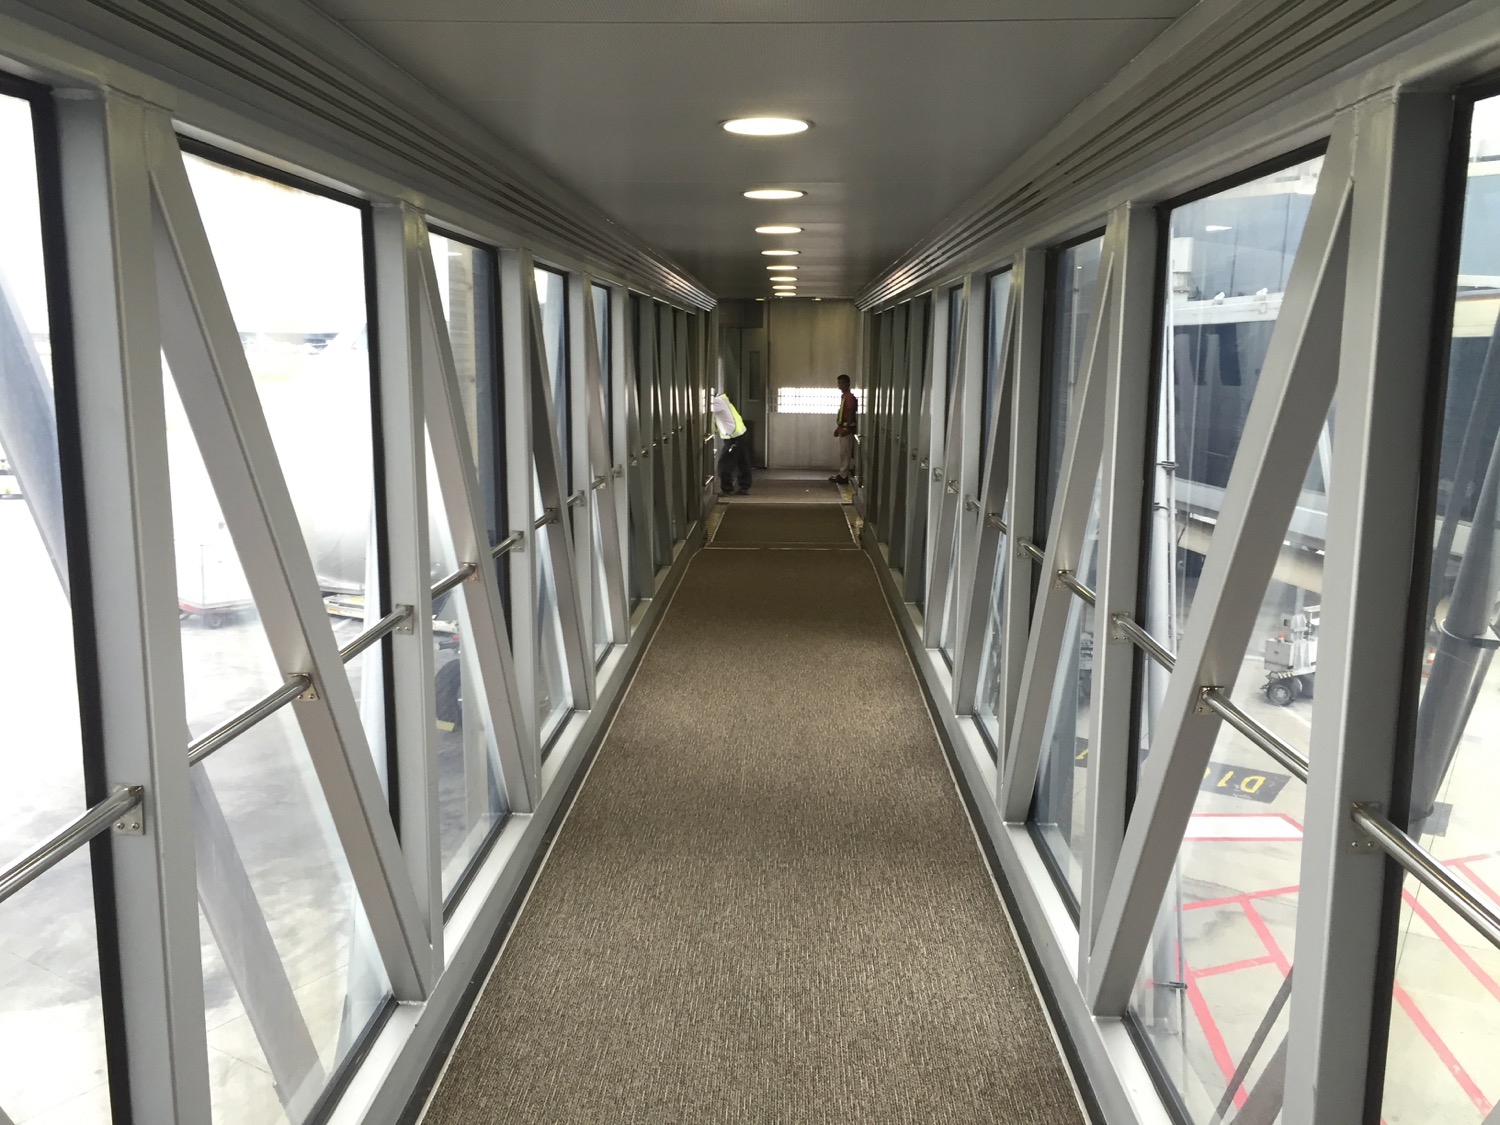 a long hallway with windows